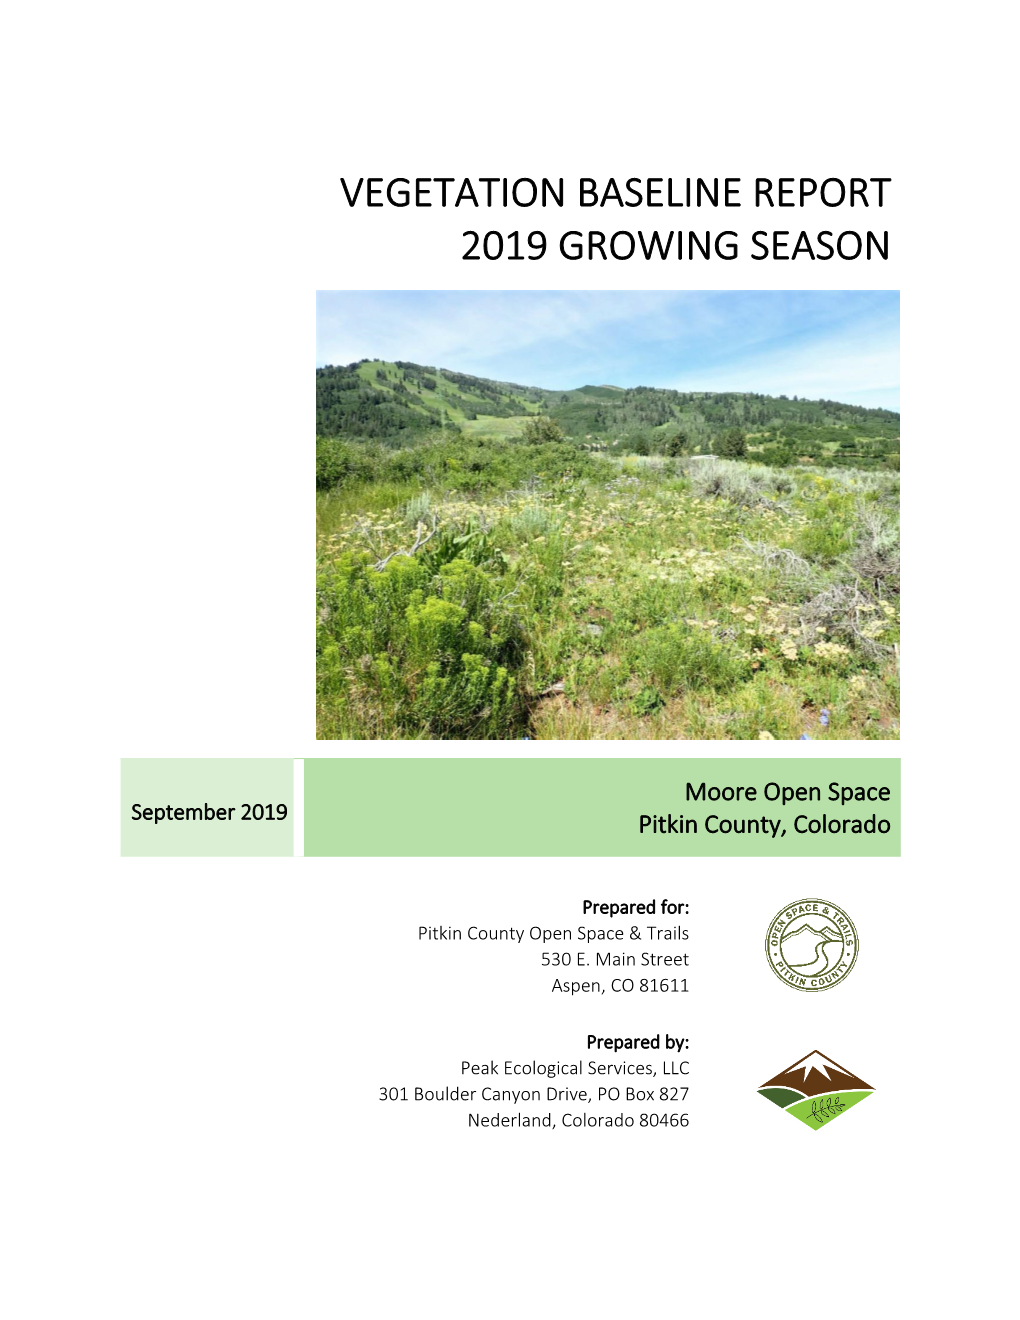 Moore Open Space Baseline Vegetation Report